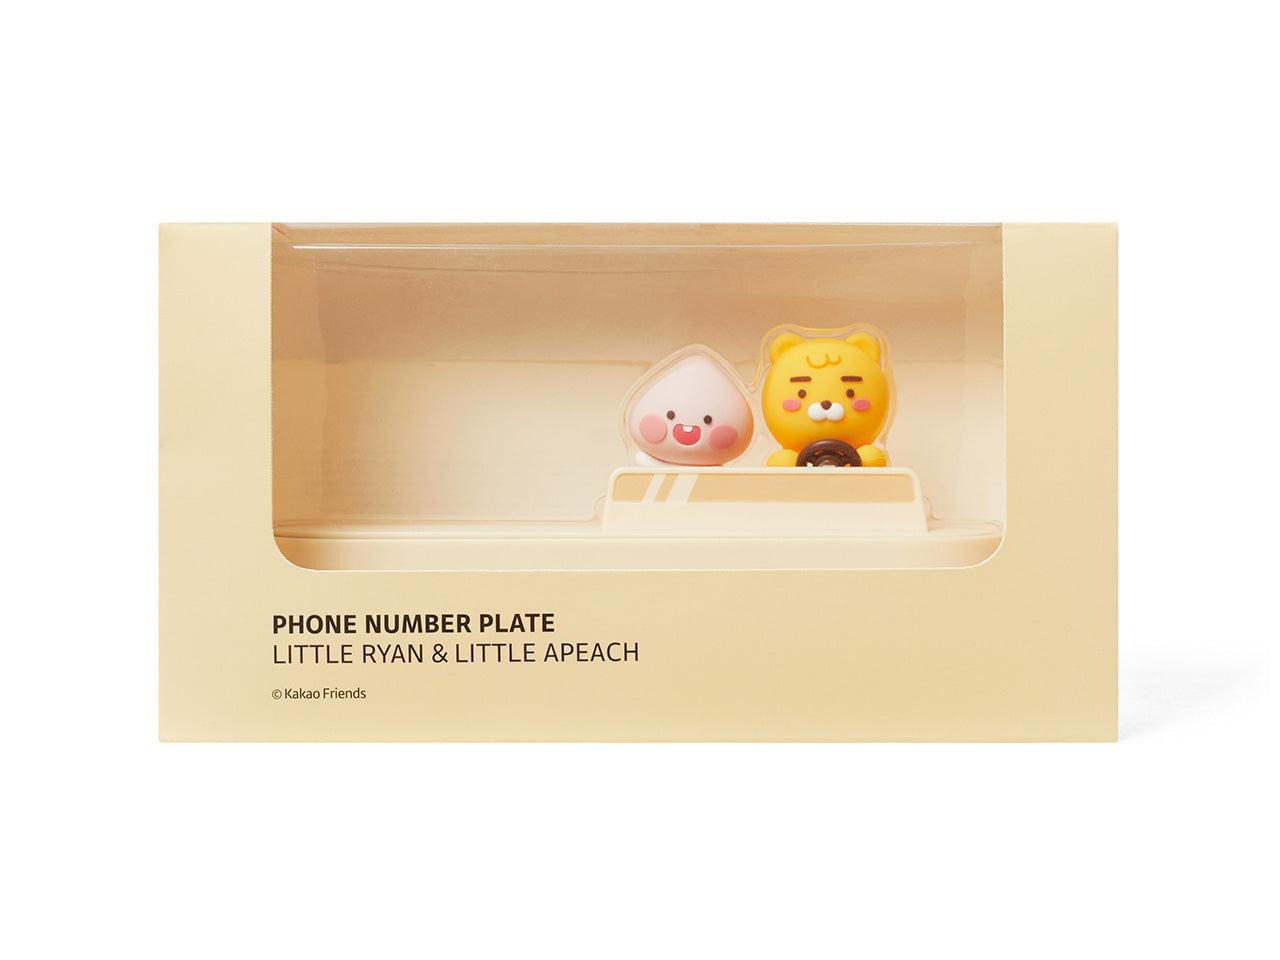 Kakao Friends Ryan & Apeach Phone Number Plate 停車號牌 - SOUL SIMPLE HK